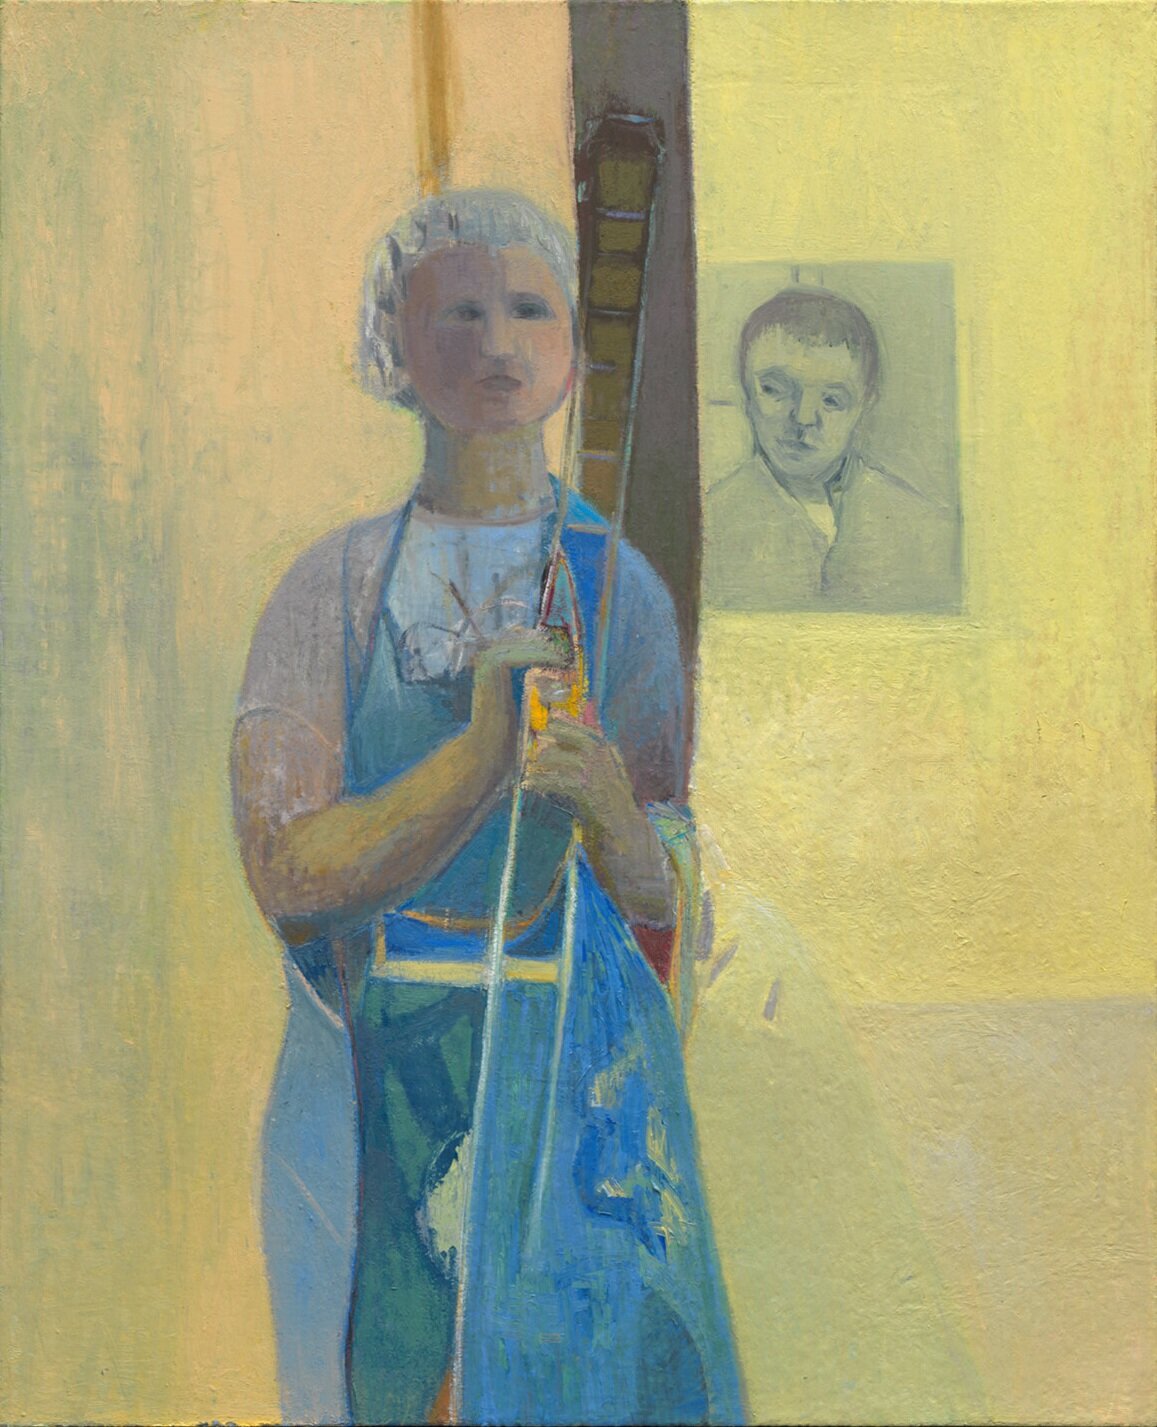  Single Figure, 2016, oil on canvas, 32”x26” 